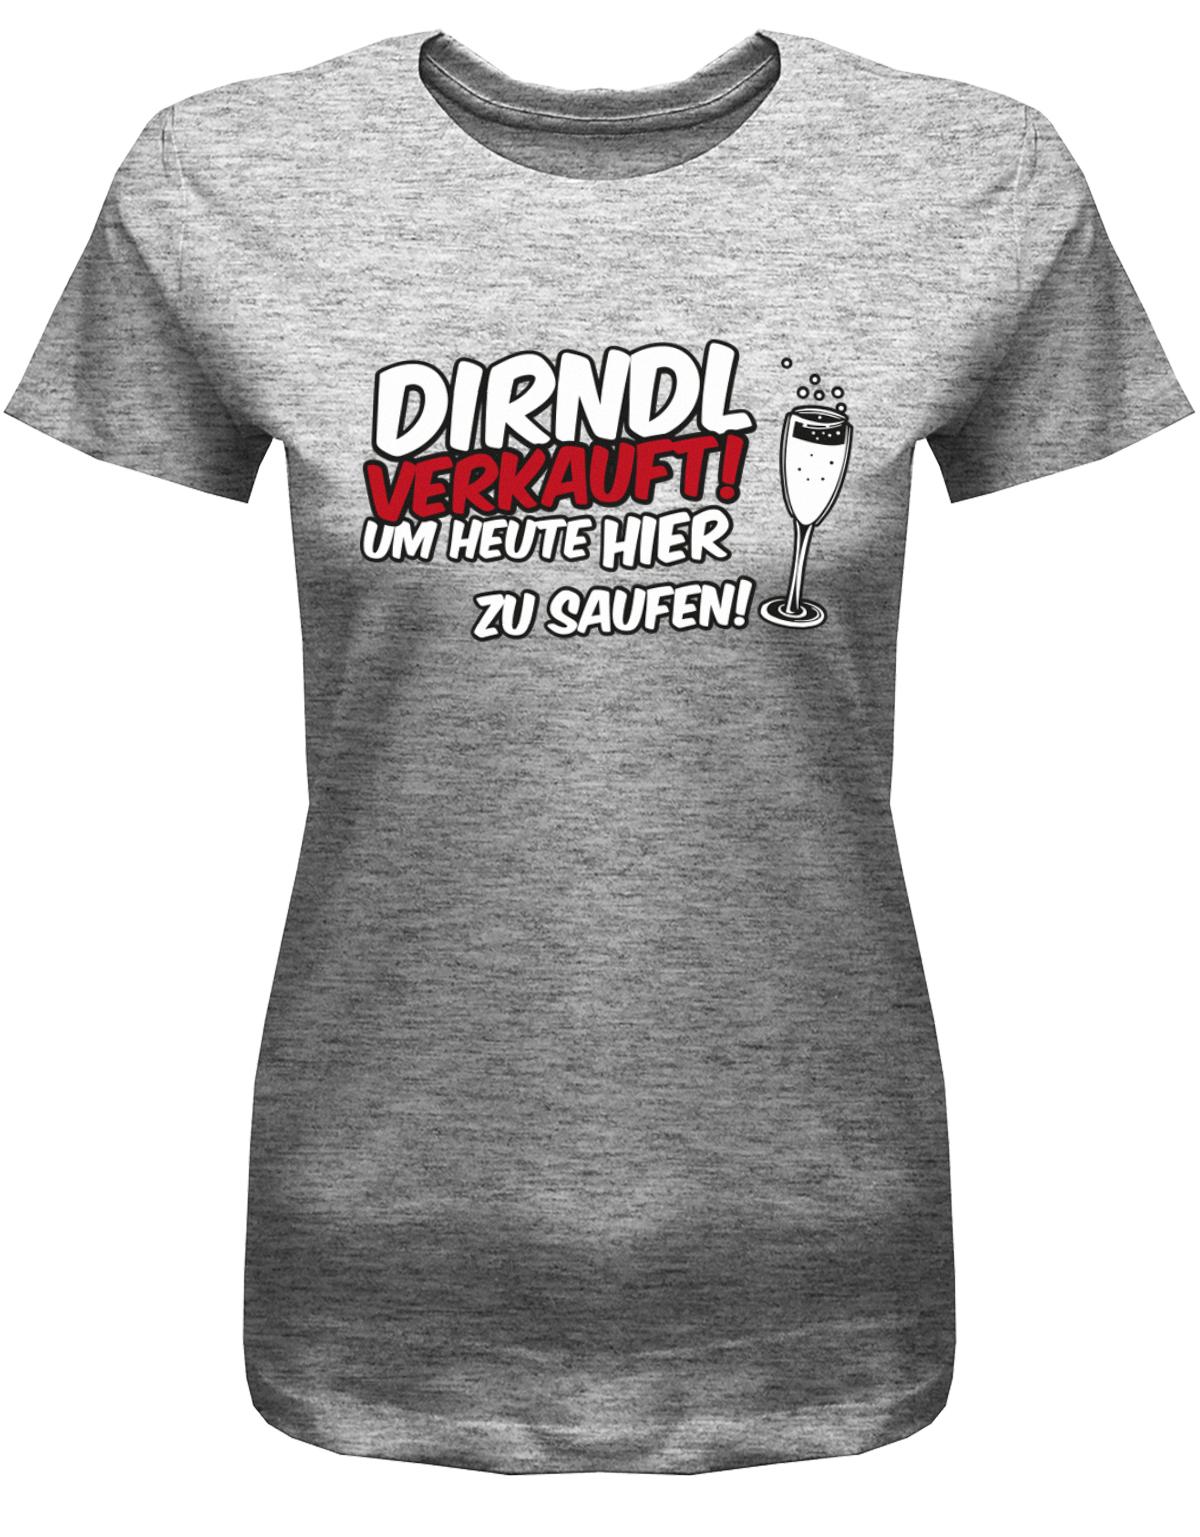 Dirndl-verkauft-um-heute-hier-zu-saufen-Damen-Shirt-Grau